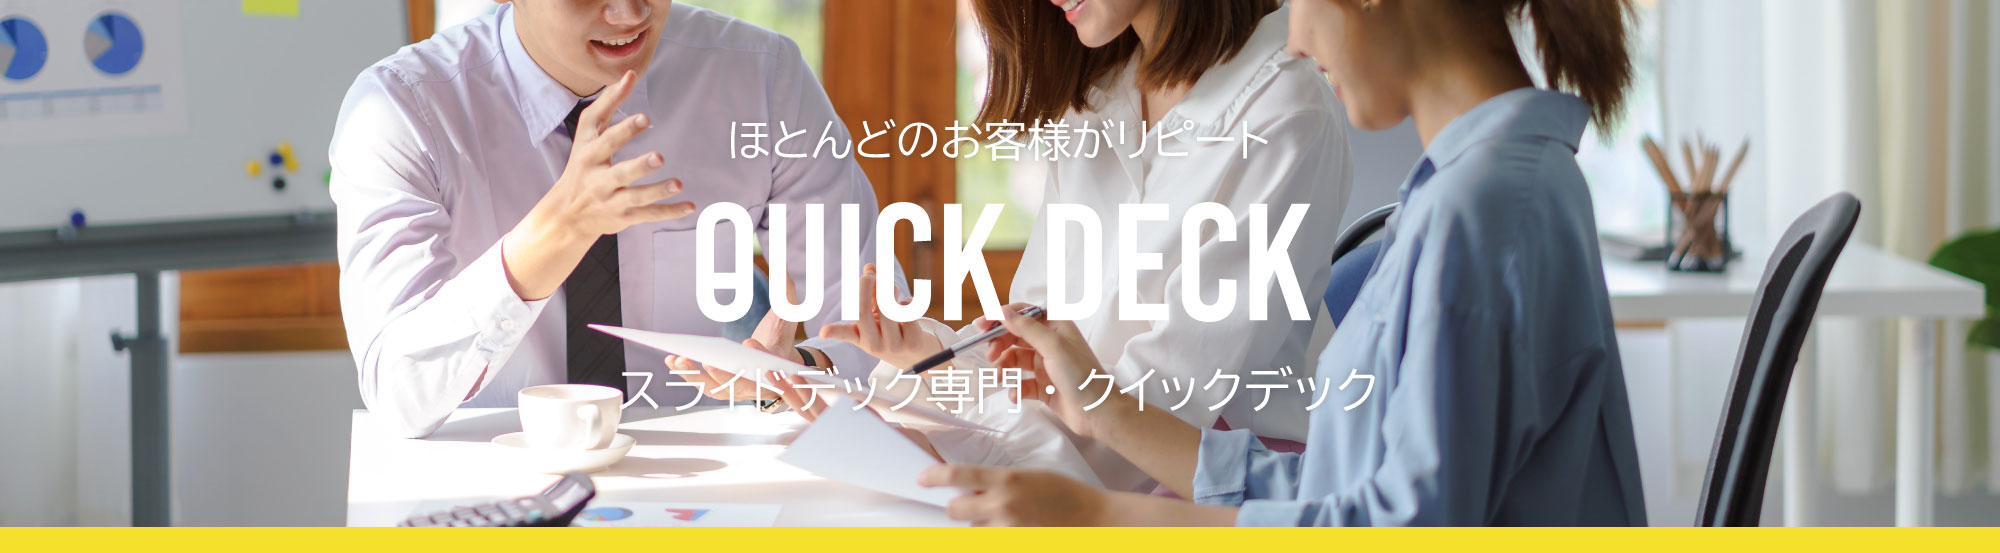 quick slide deck design_Japanese design company